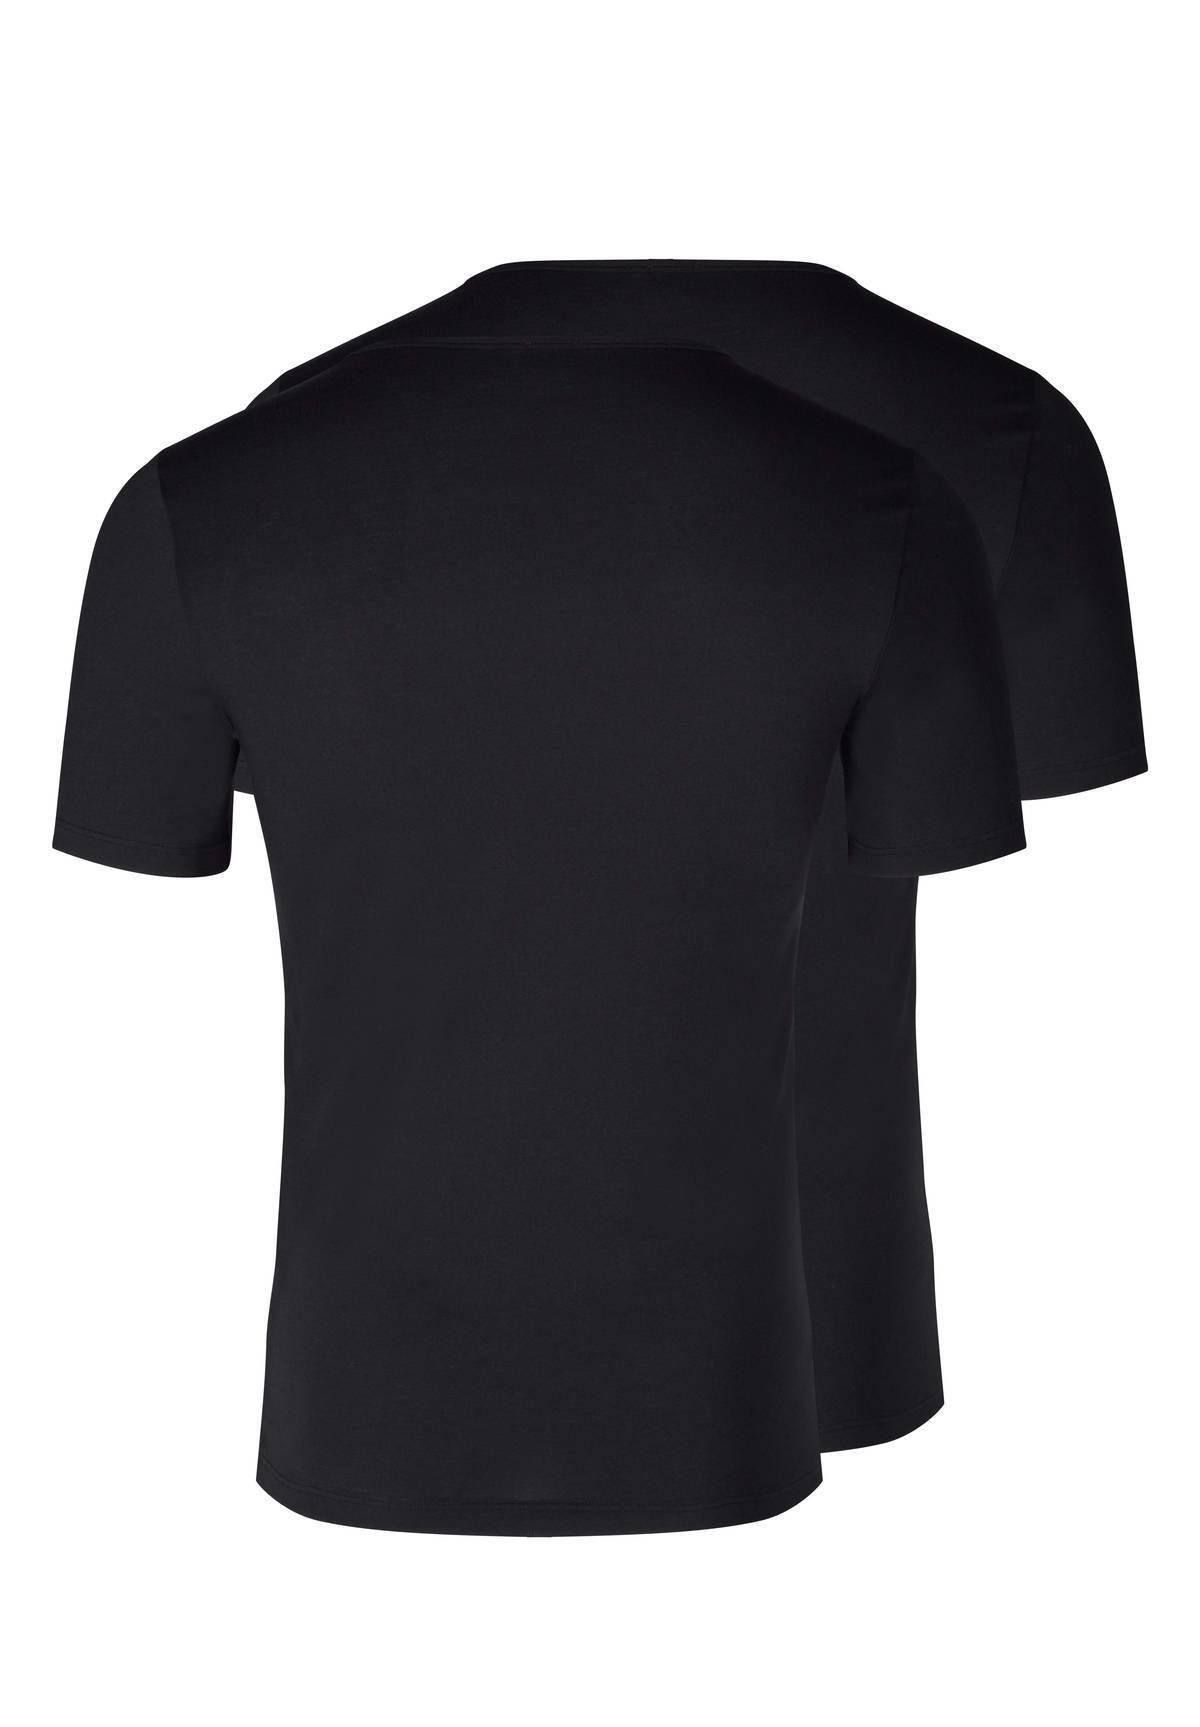 Skiny Unterhemd Herren T-Shirt, 2er Schwarz - Halbarm Unterhemd, Pack